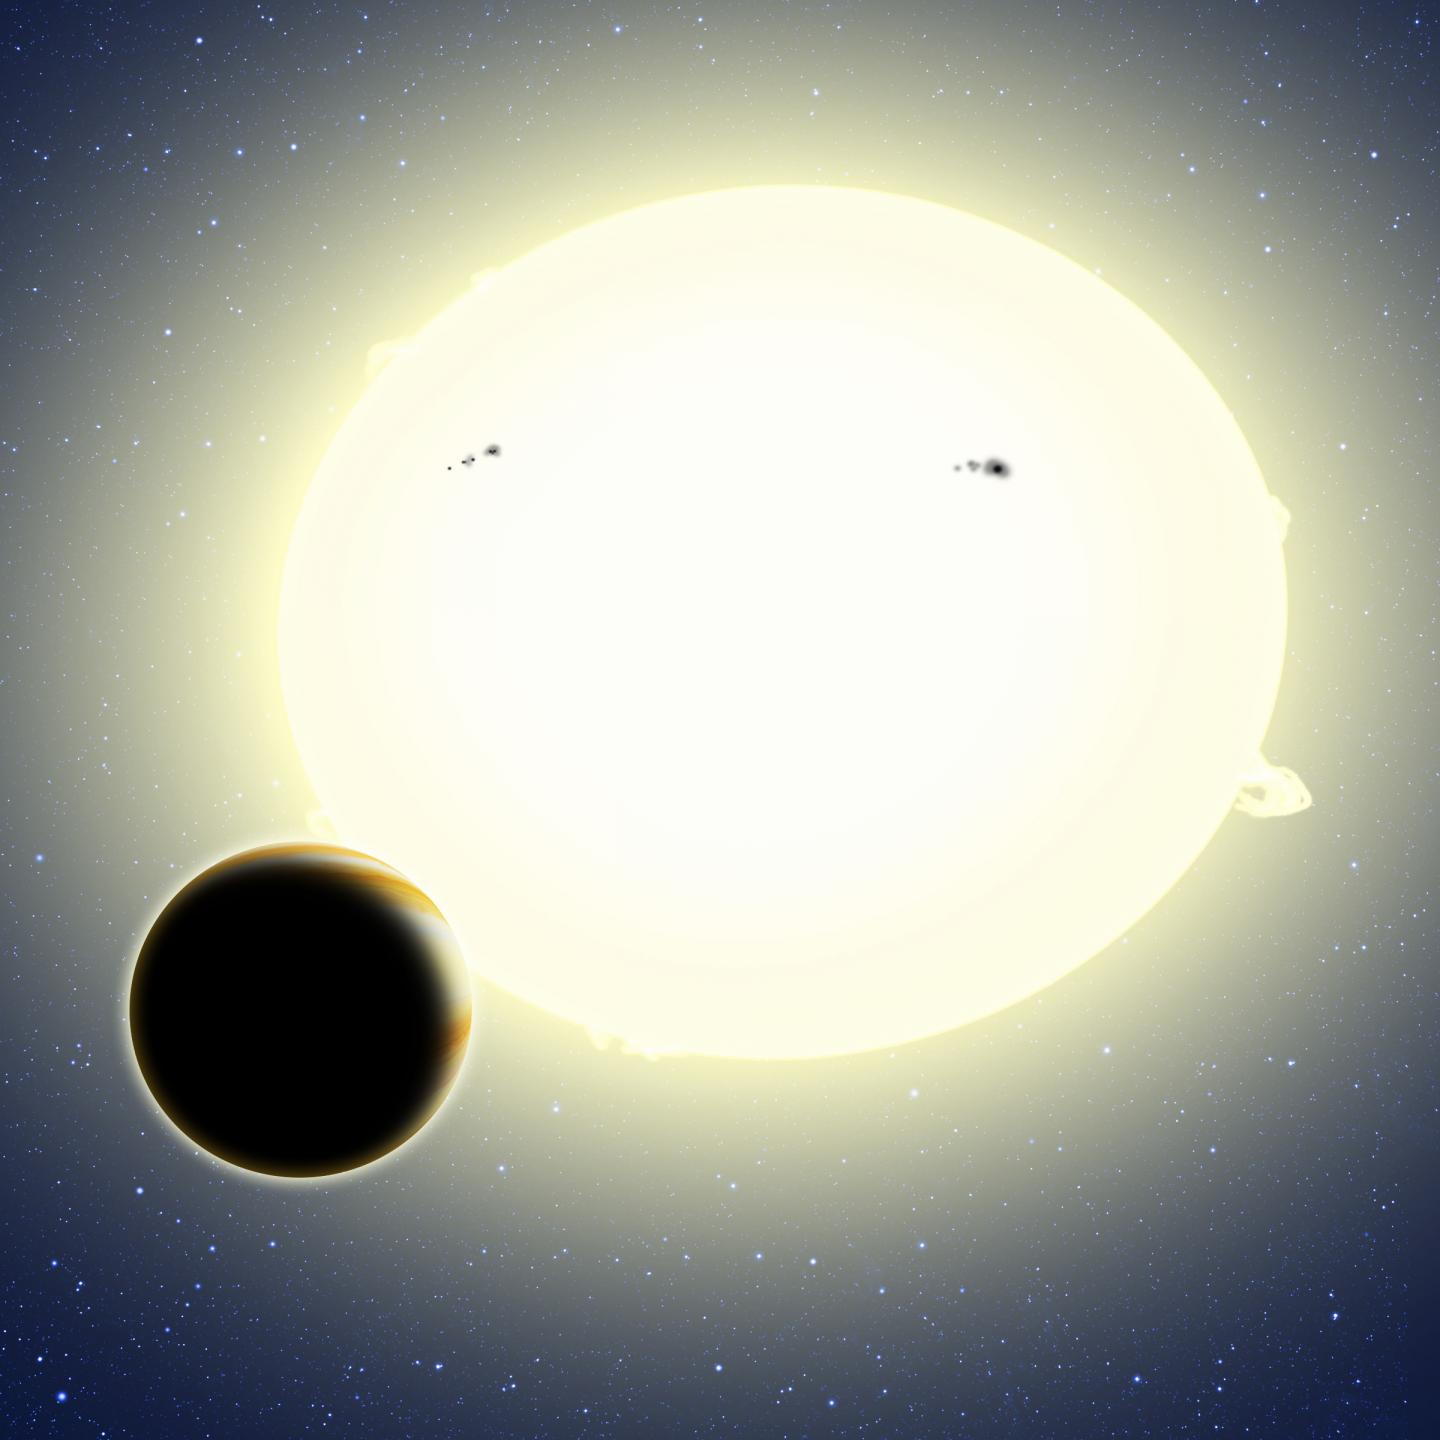 Exoplanet HIP 116454b